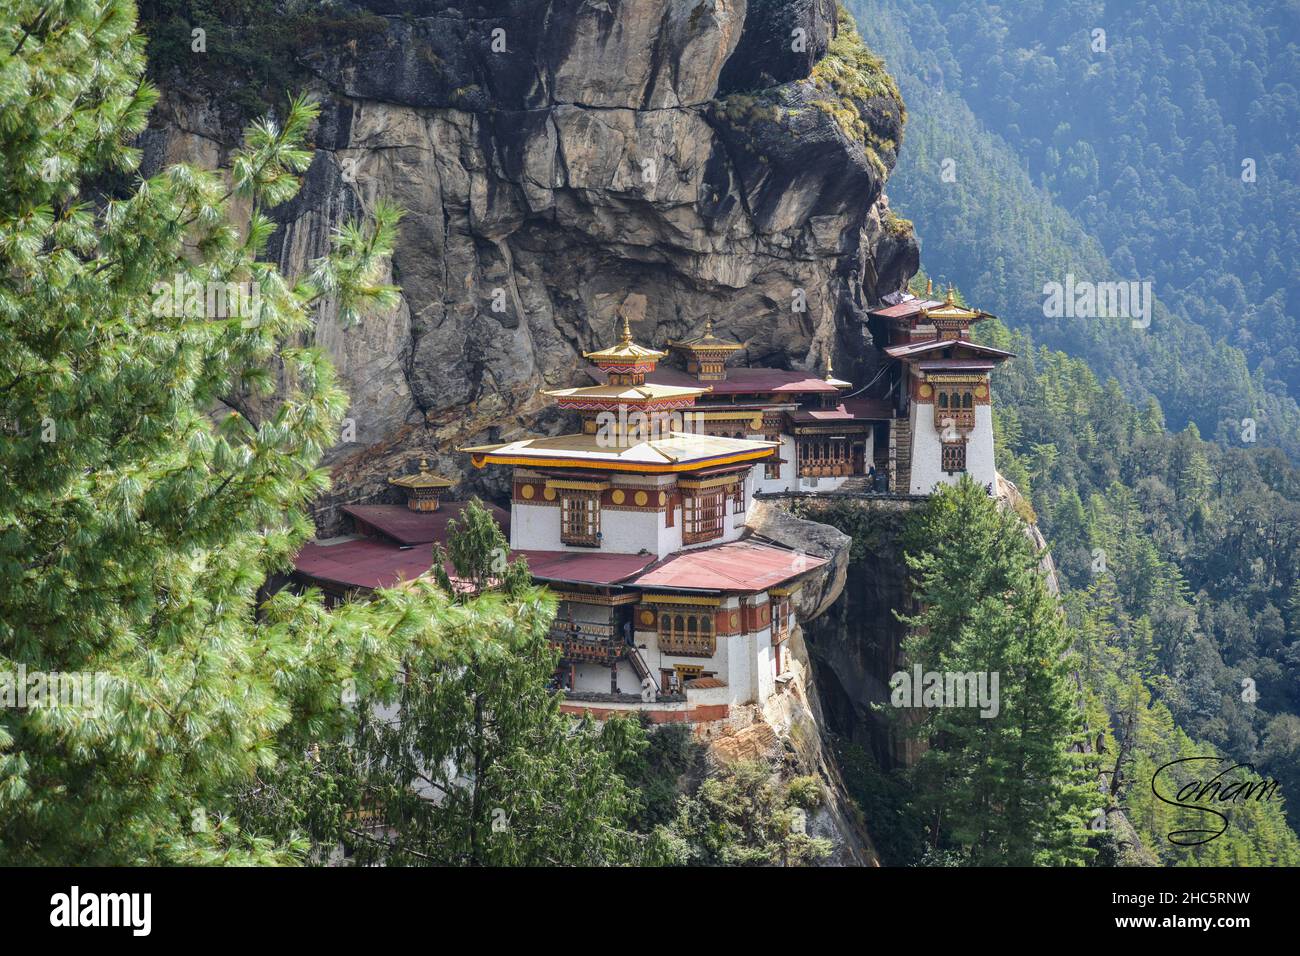 Aerial view of the beautiful Taktsang Palphug Monastery in Paro, Bhutan surrounded by greenery Stock Photo